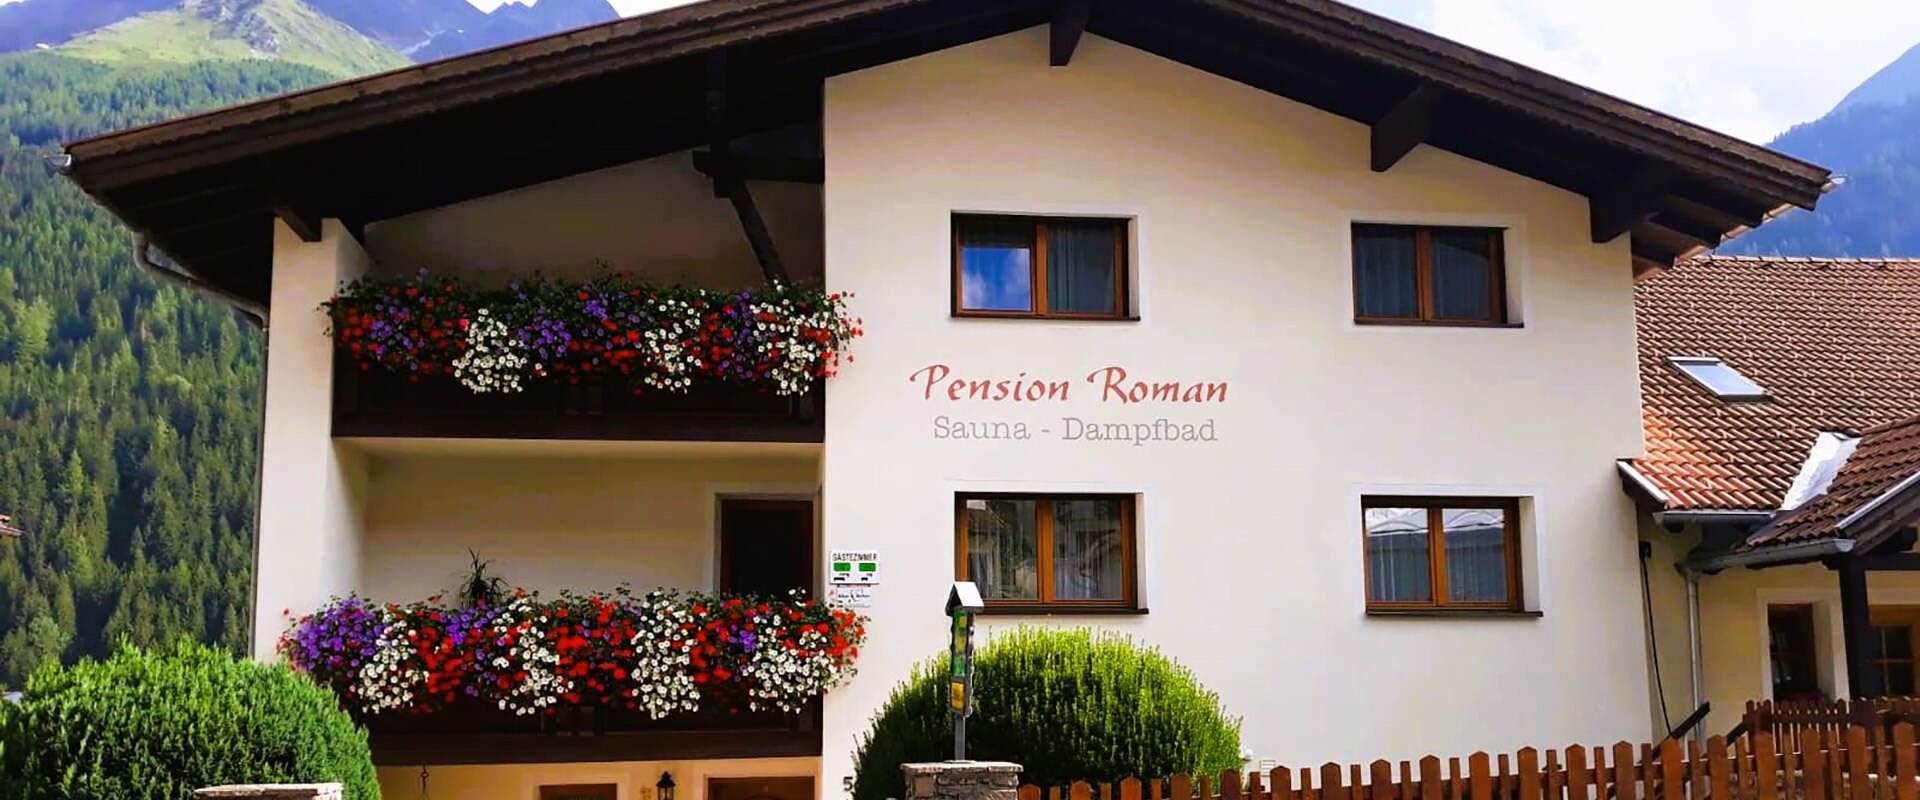 Pension Roman at the Arlberg in Tyrol